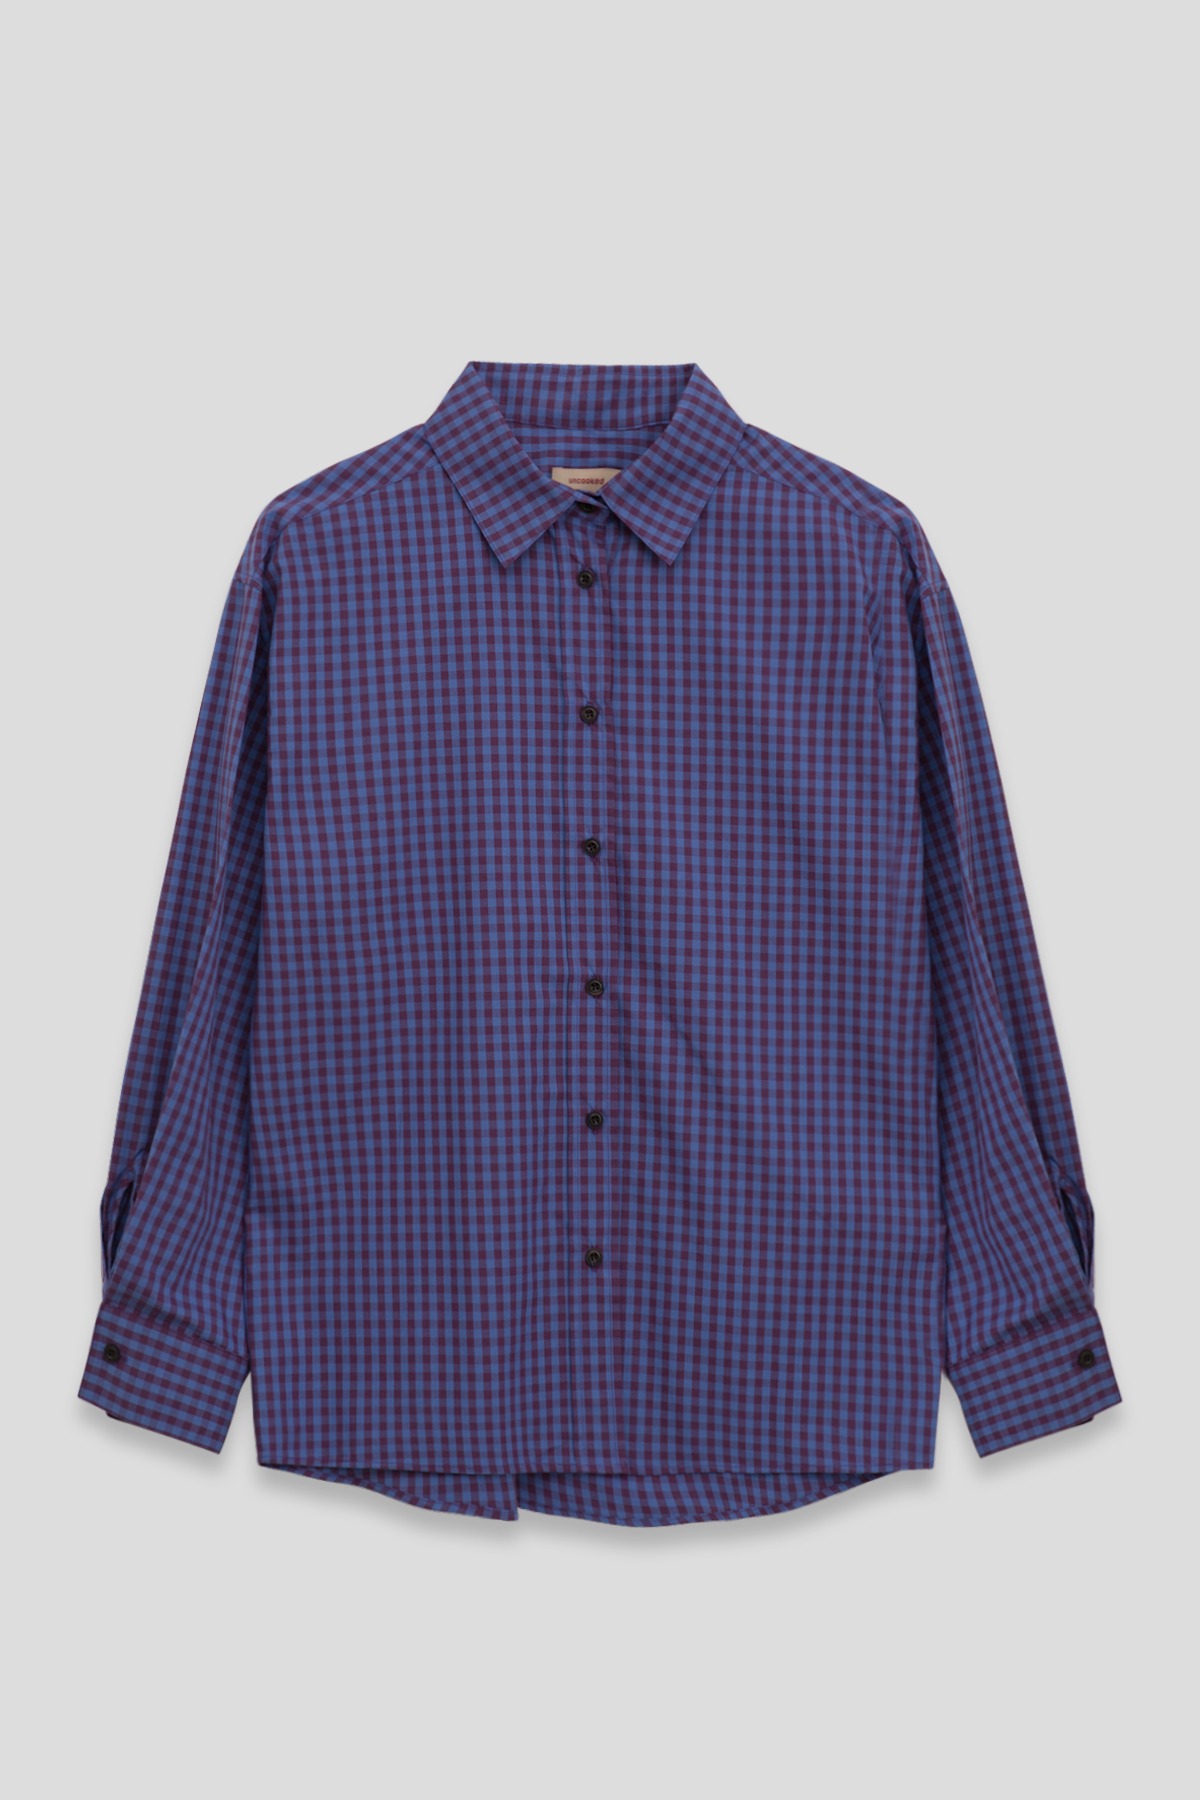 Cotton check basic shirt(blue plum)